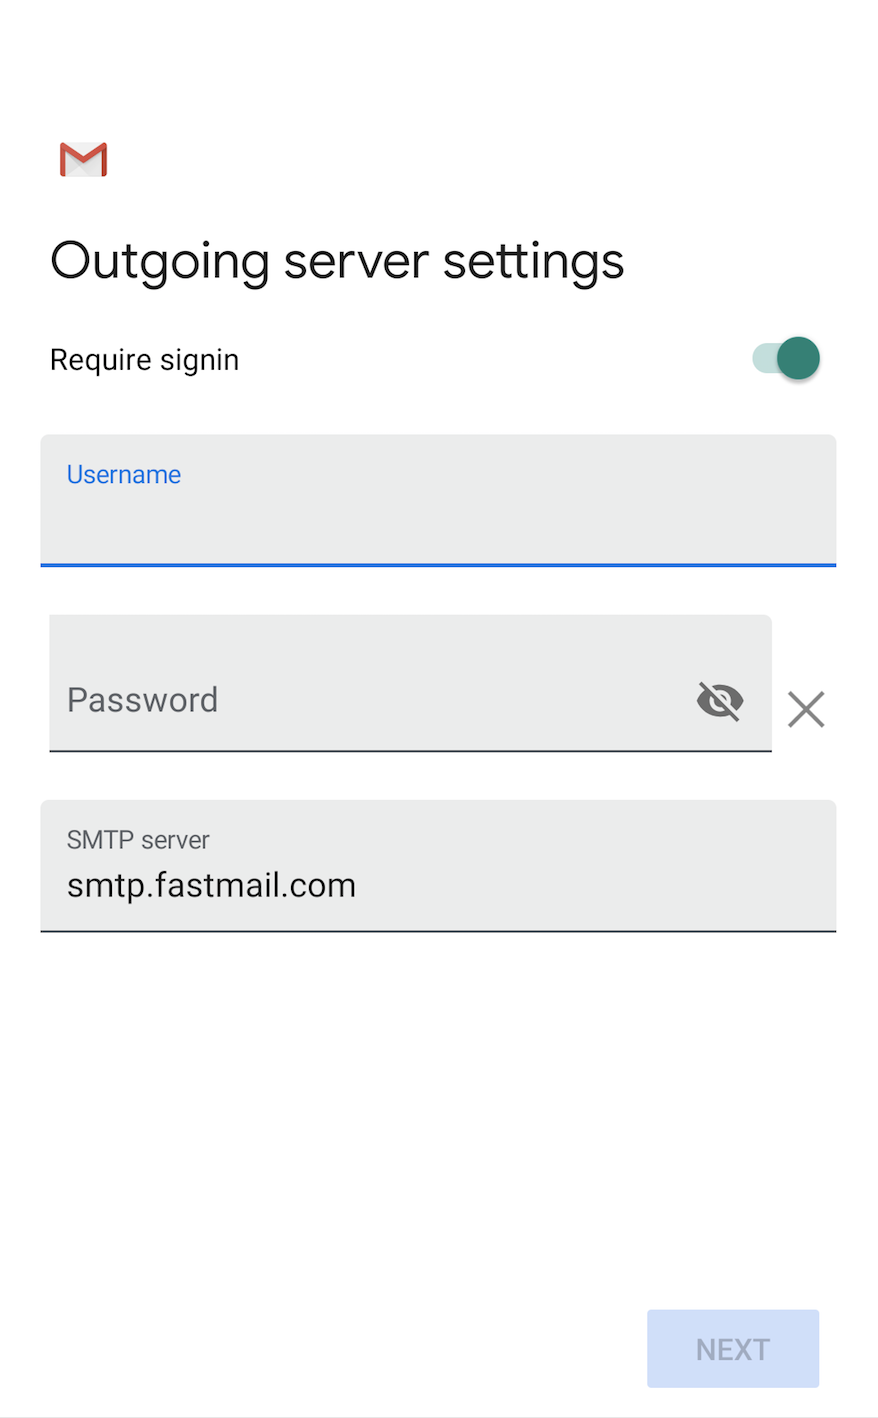 Screen to enter outgoing server settings